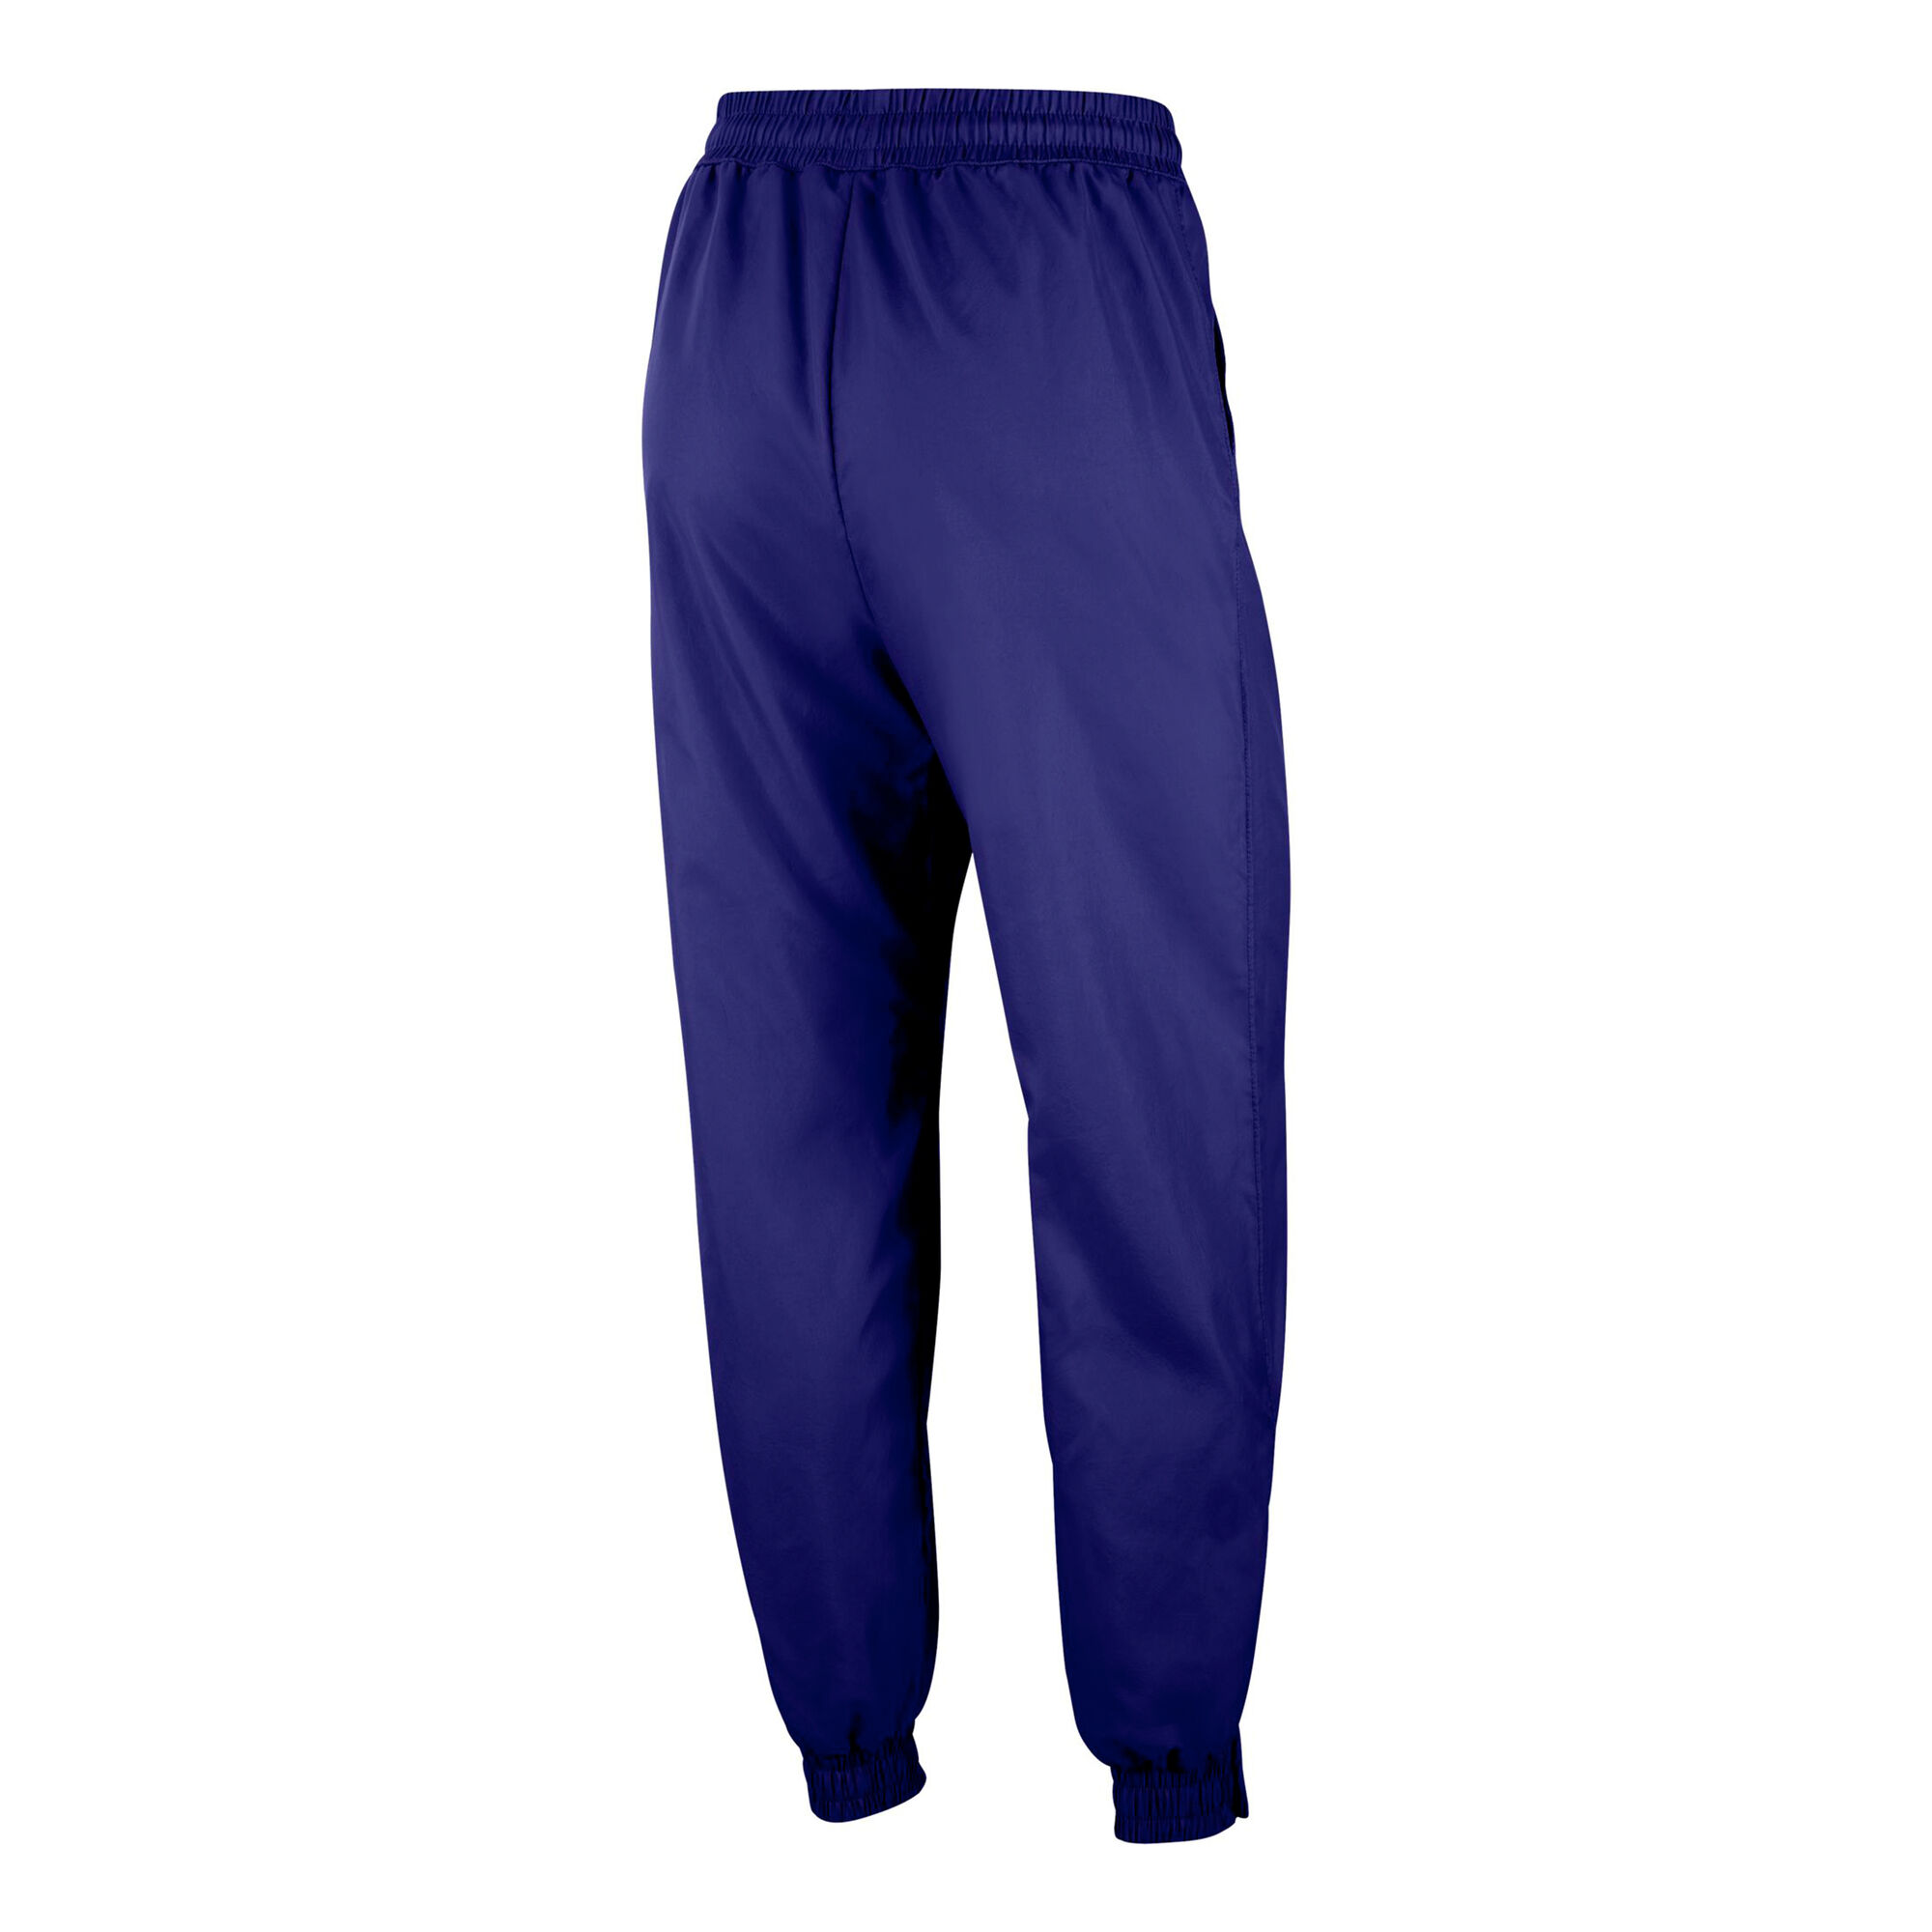 Buy Nike Court Training Pants Women Blue online